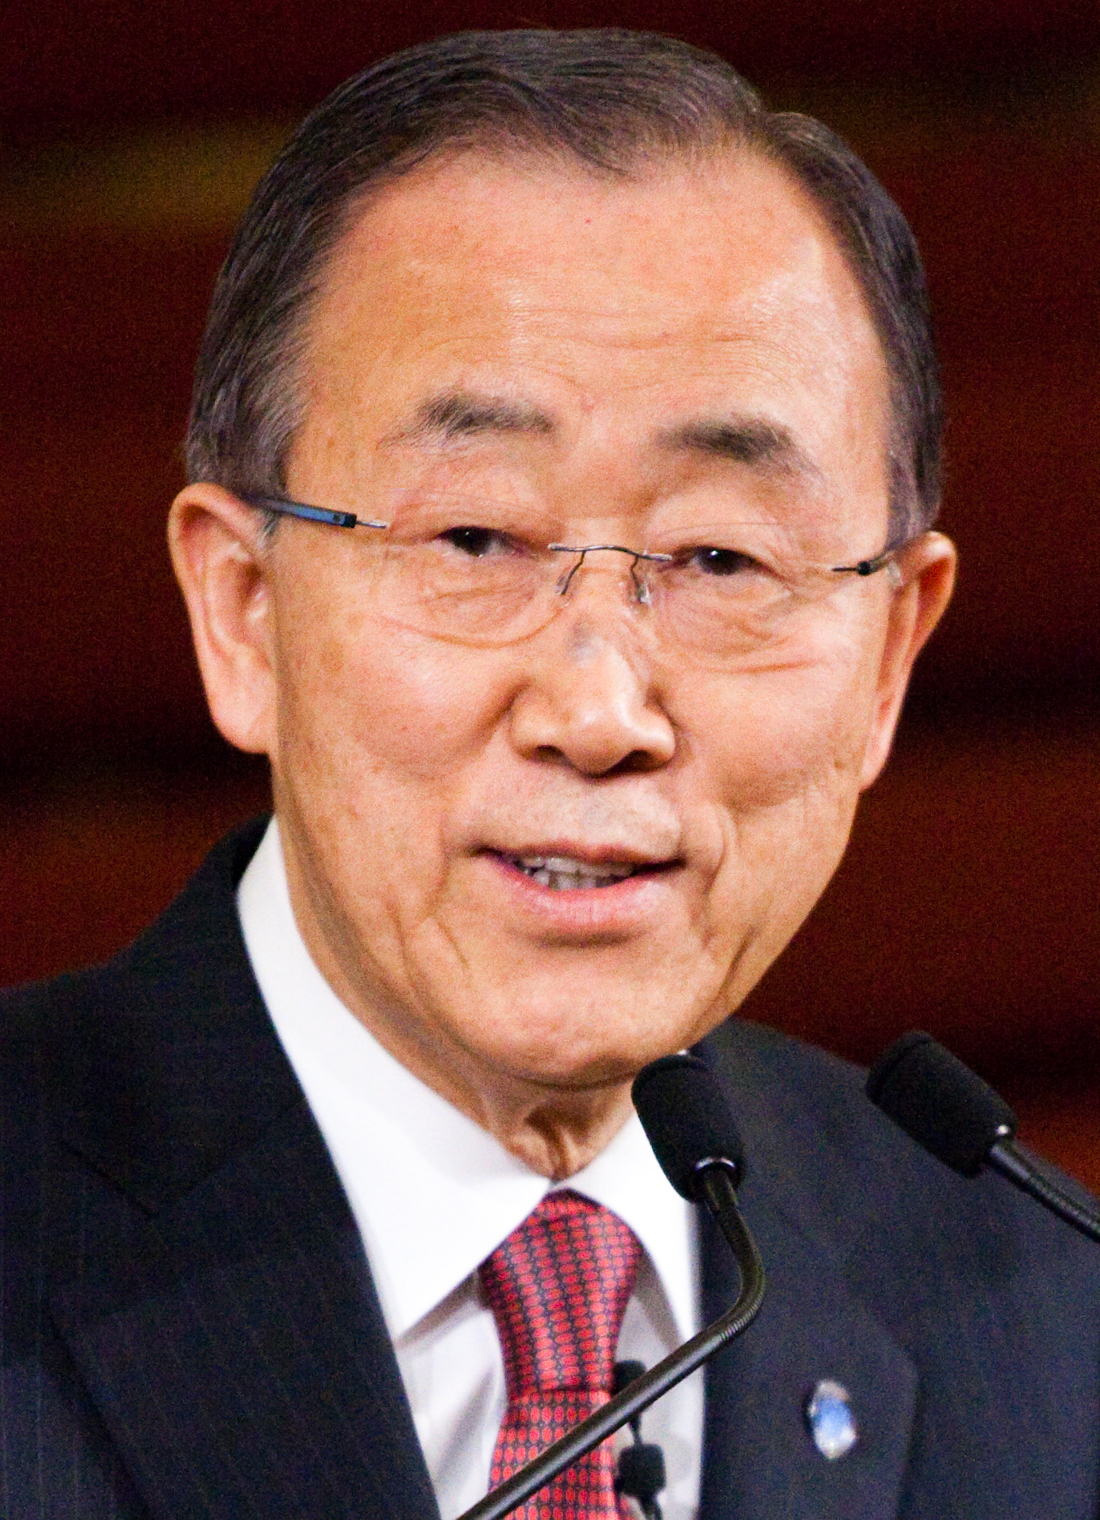 Ban Ki-moon, UN Secretary General from 2007 to 2016